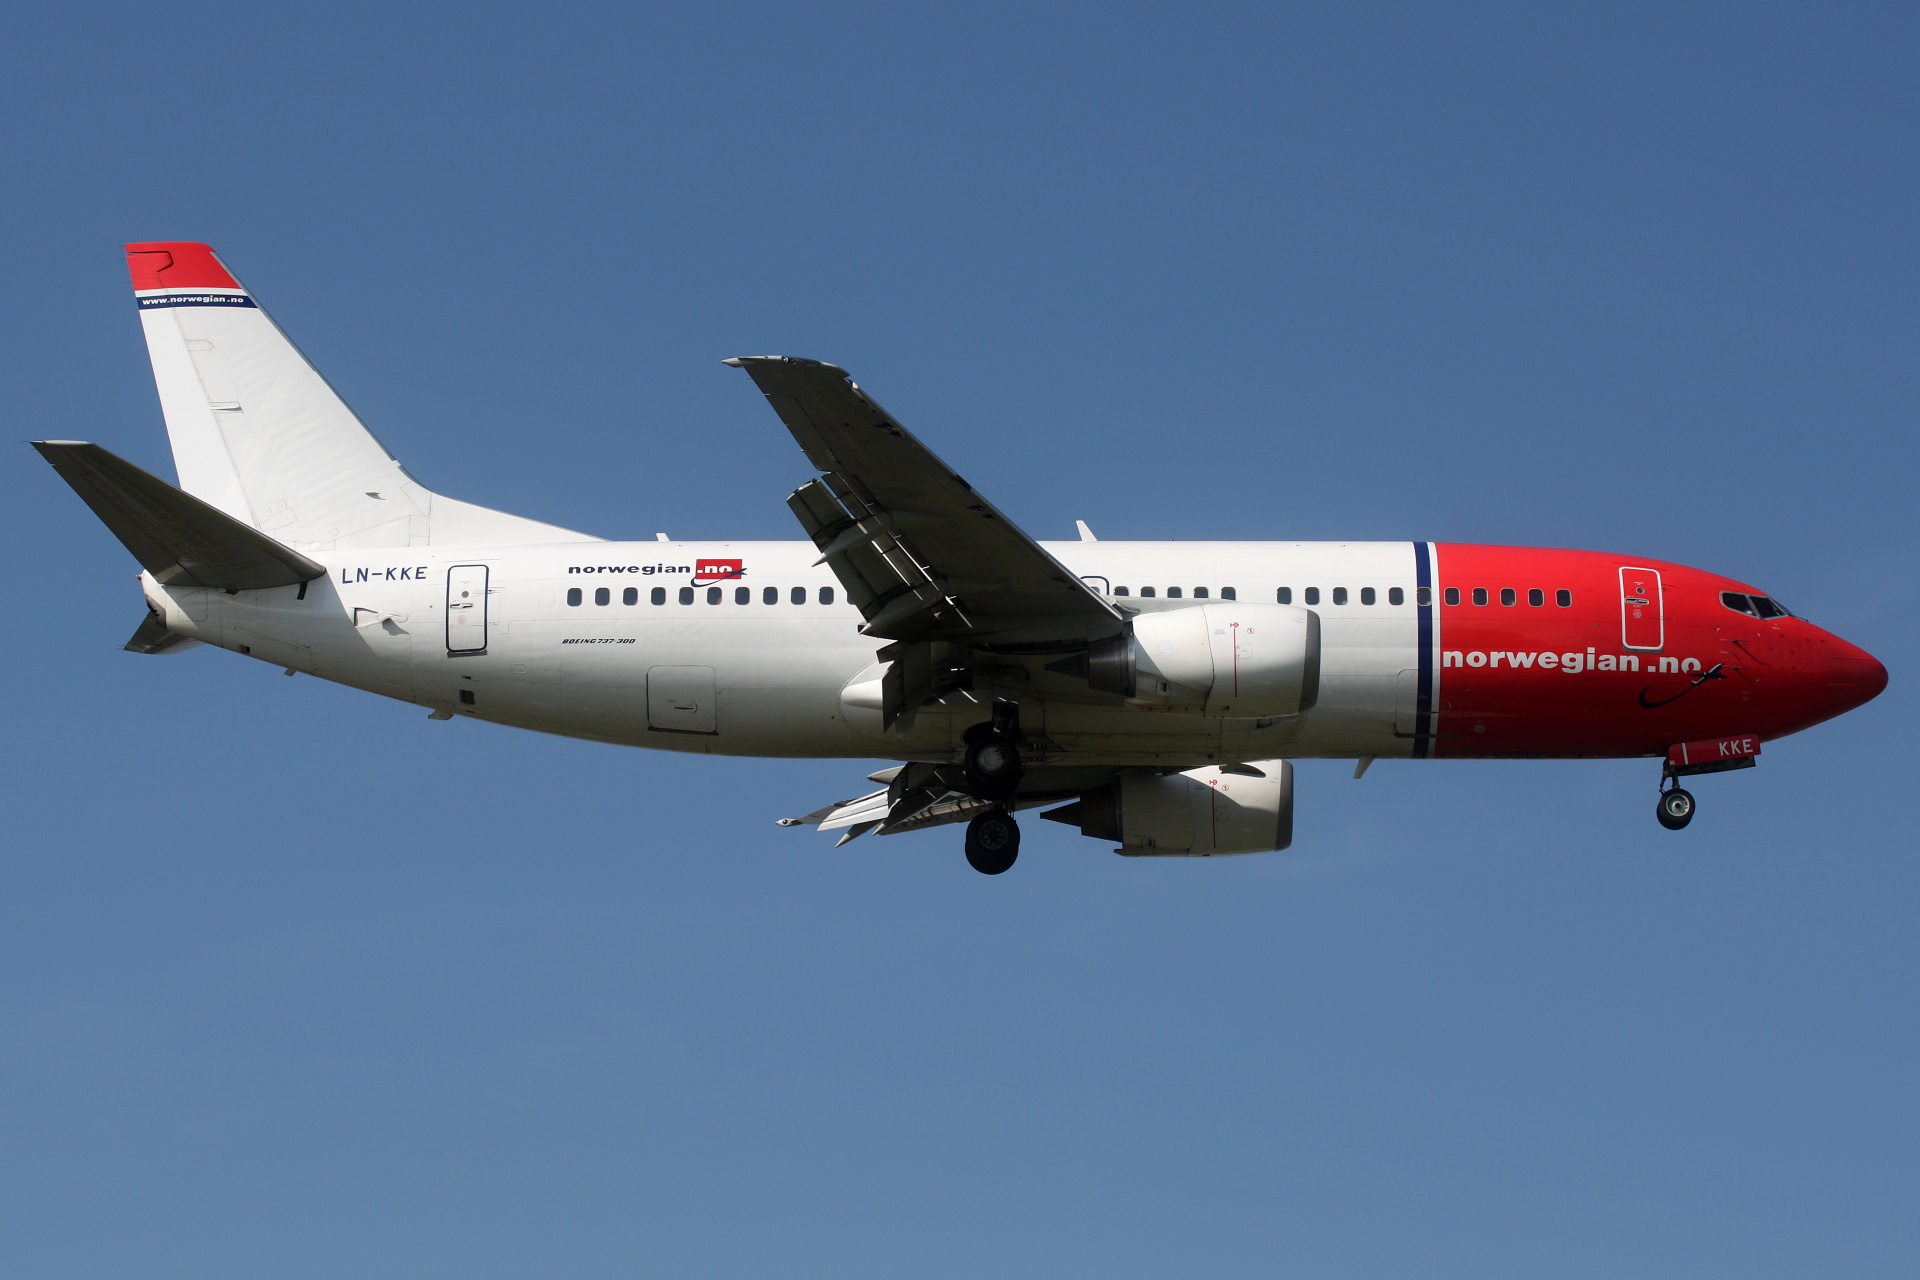 LN-KKE (Aircraft » EPWA Spotting » Boeing 737-300 » Norwegian Air Shuttle)